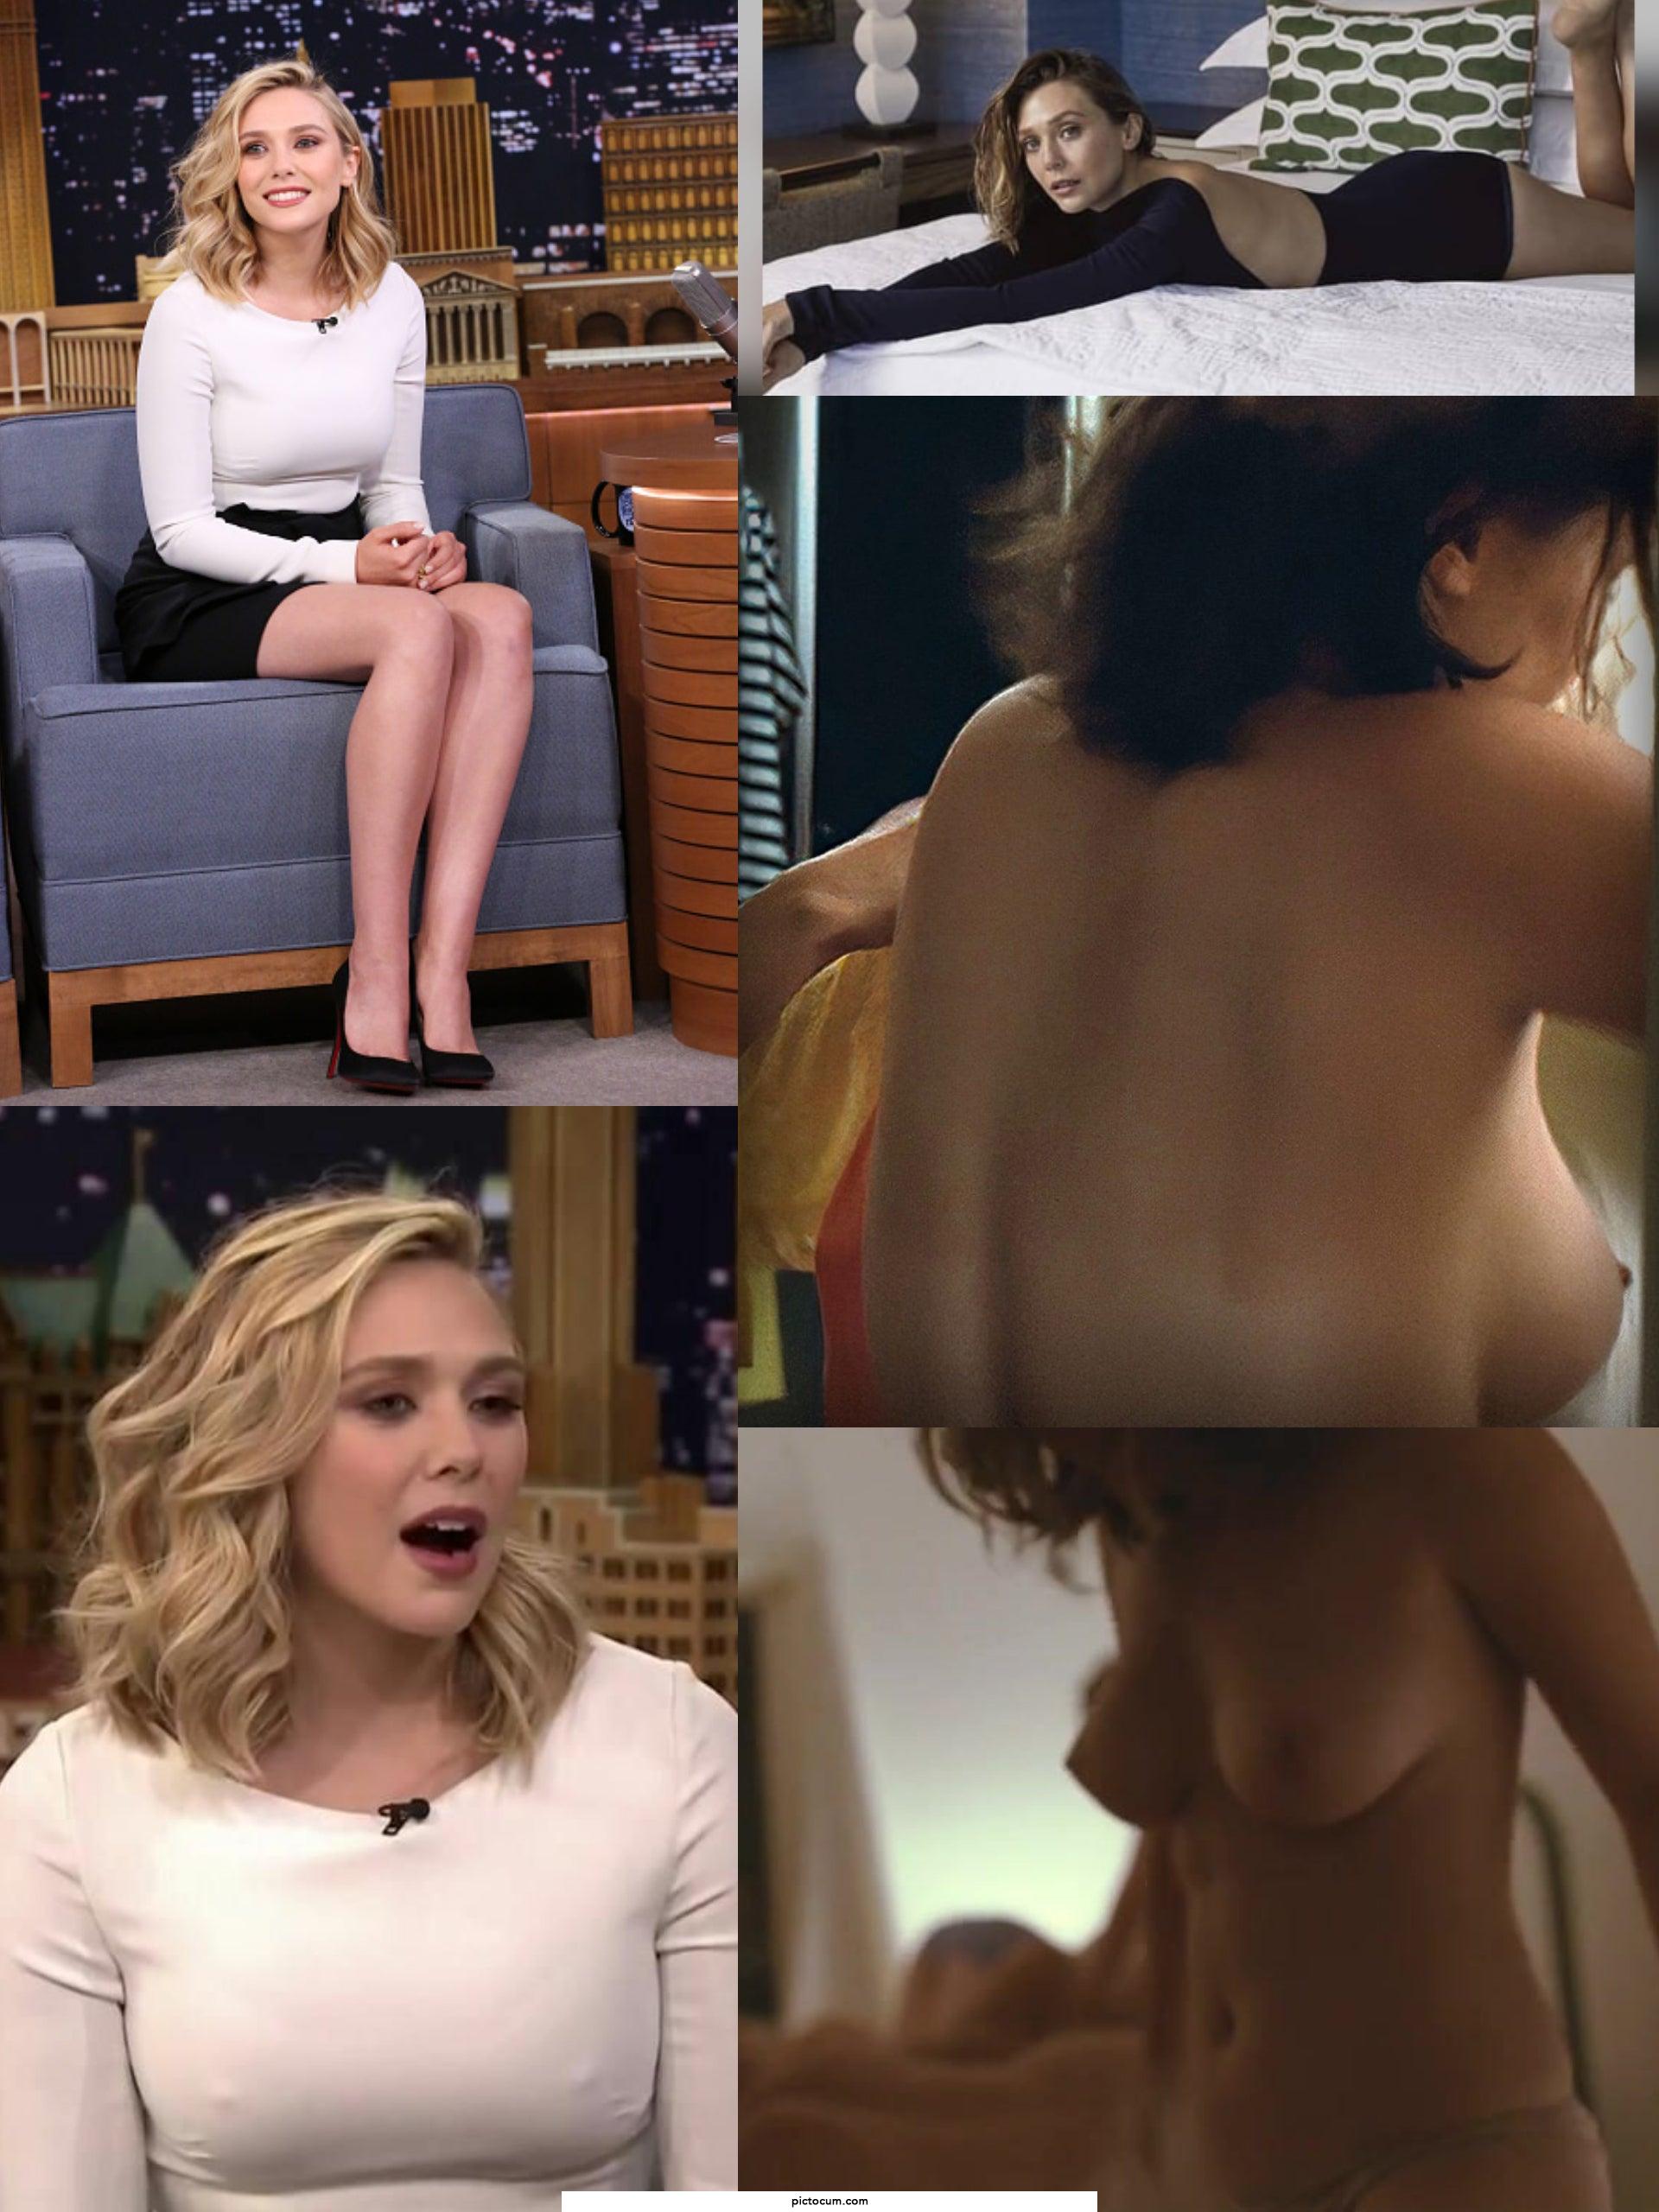 Elizabeth Olsen and her beautiful breasts